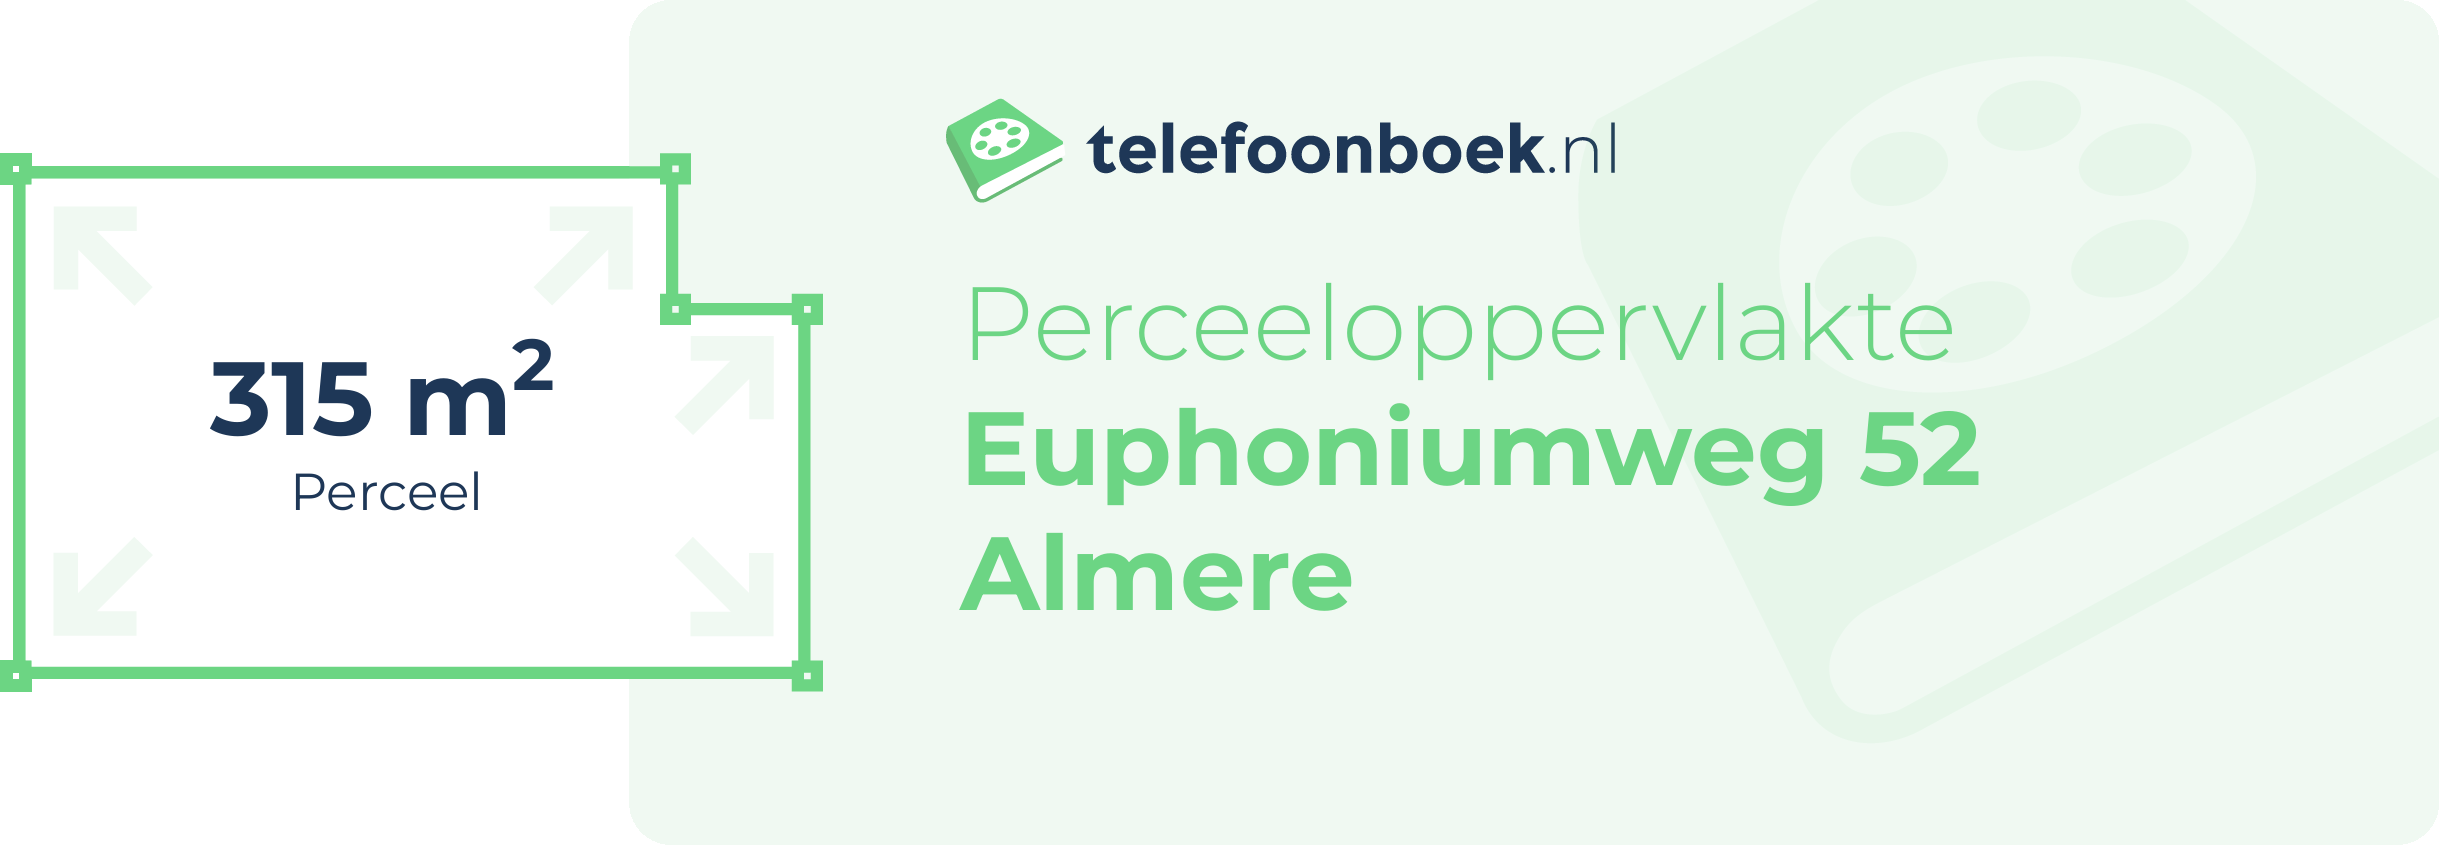 Perceeloppervlakte Euphoniumweg 52 Almere